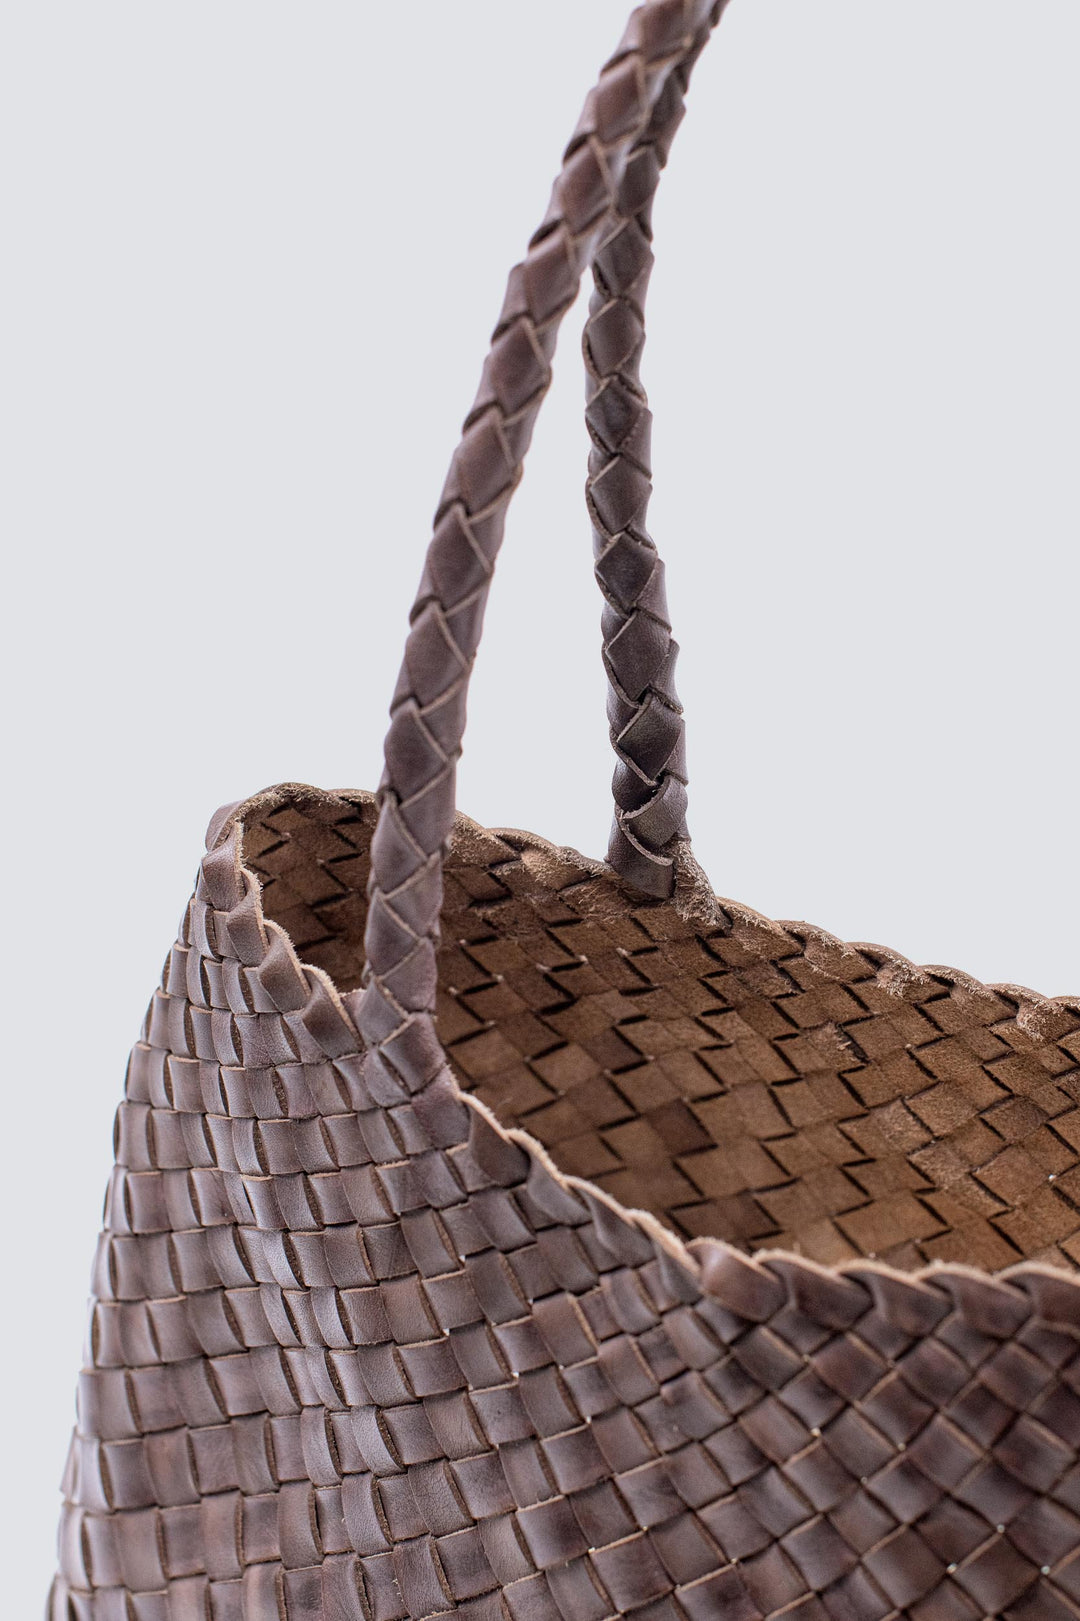 Dragon Diffusion woven leather bag handmade - Santa Croce Big Grey